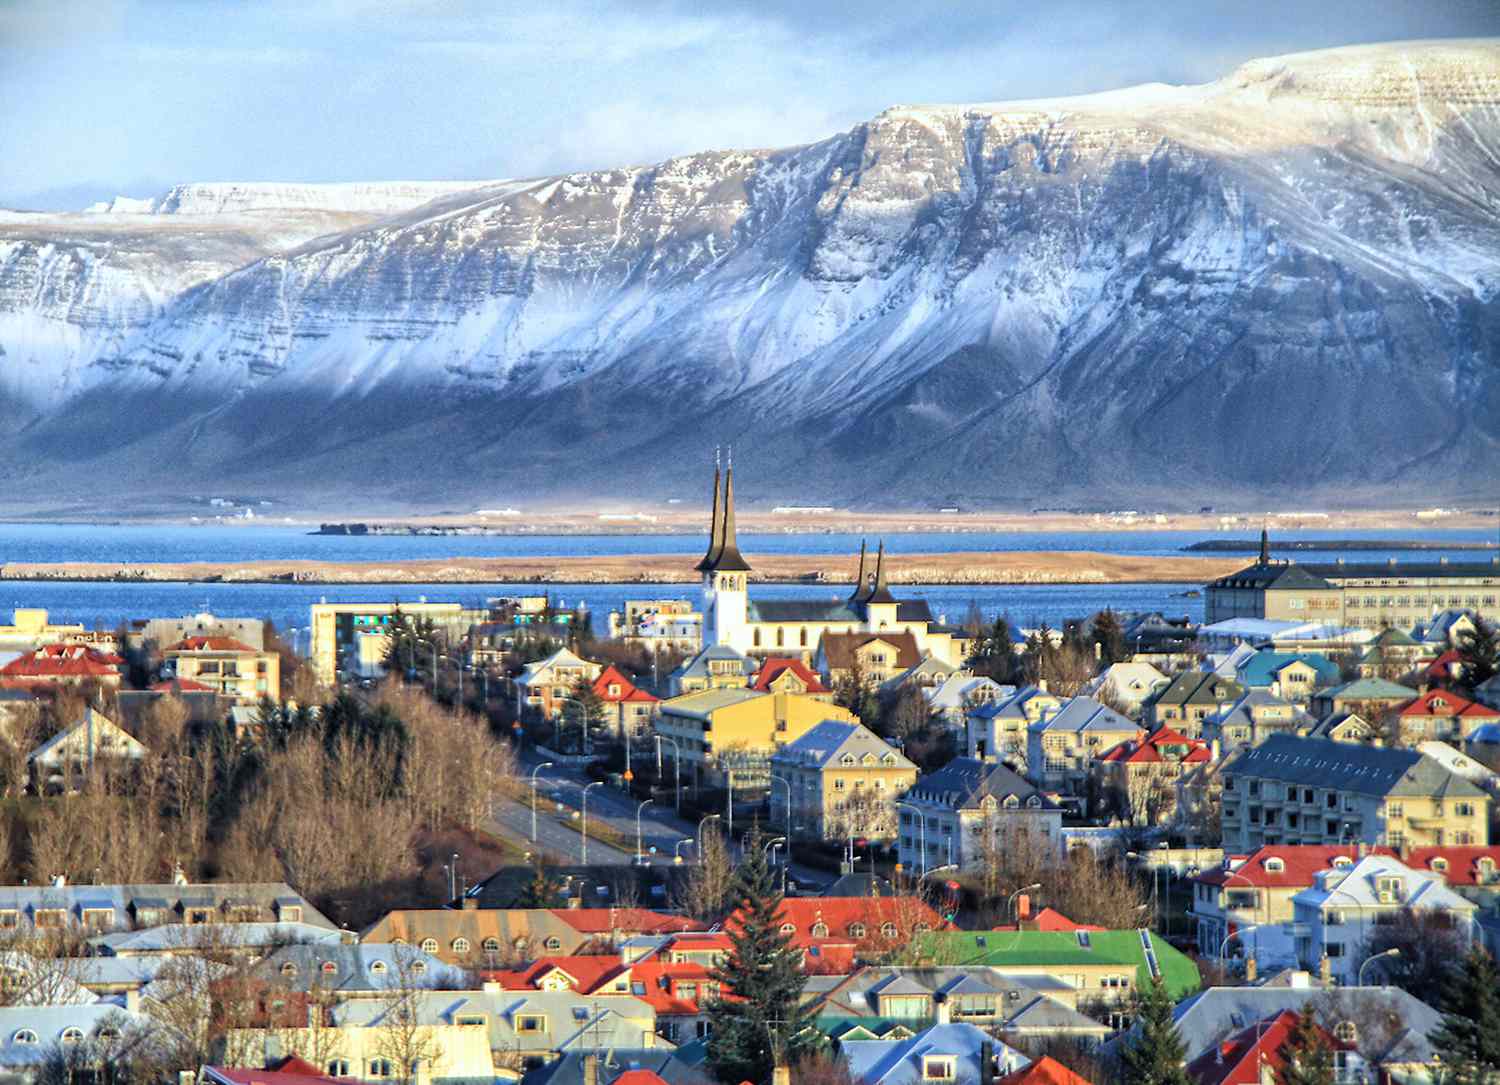 Reykjavík - Iceland's Amazing Capital City